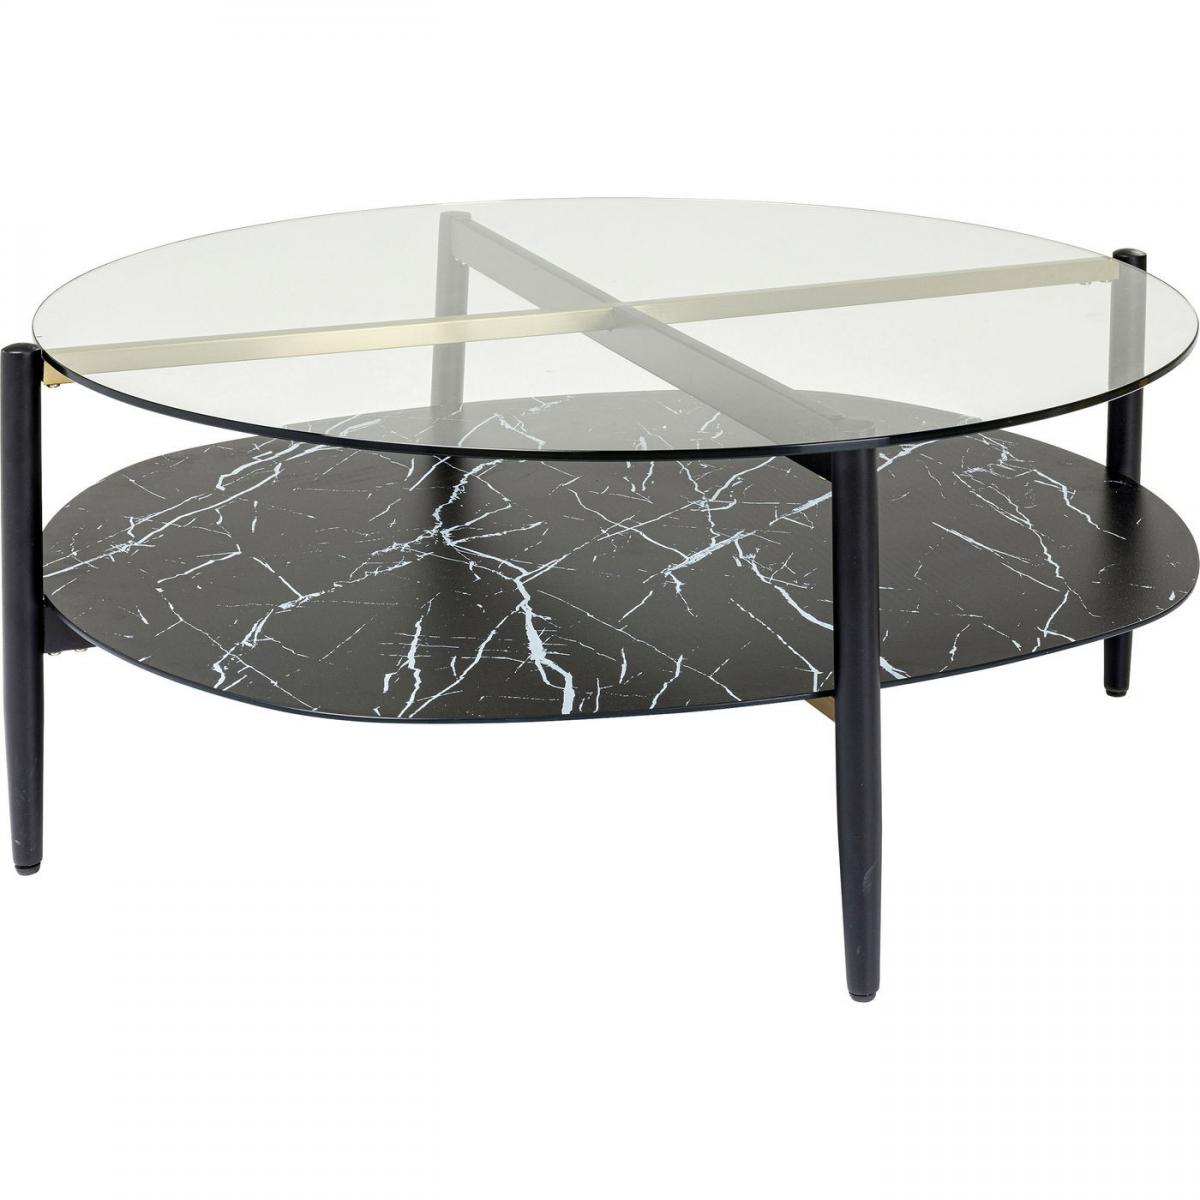 Karedesign - Table basse Noblesse ovale 97x91cm Kare Design - Tables basses